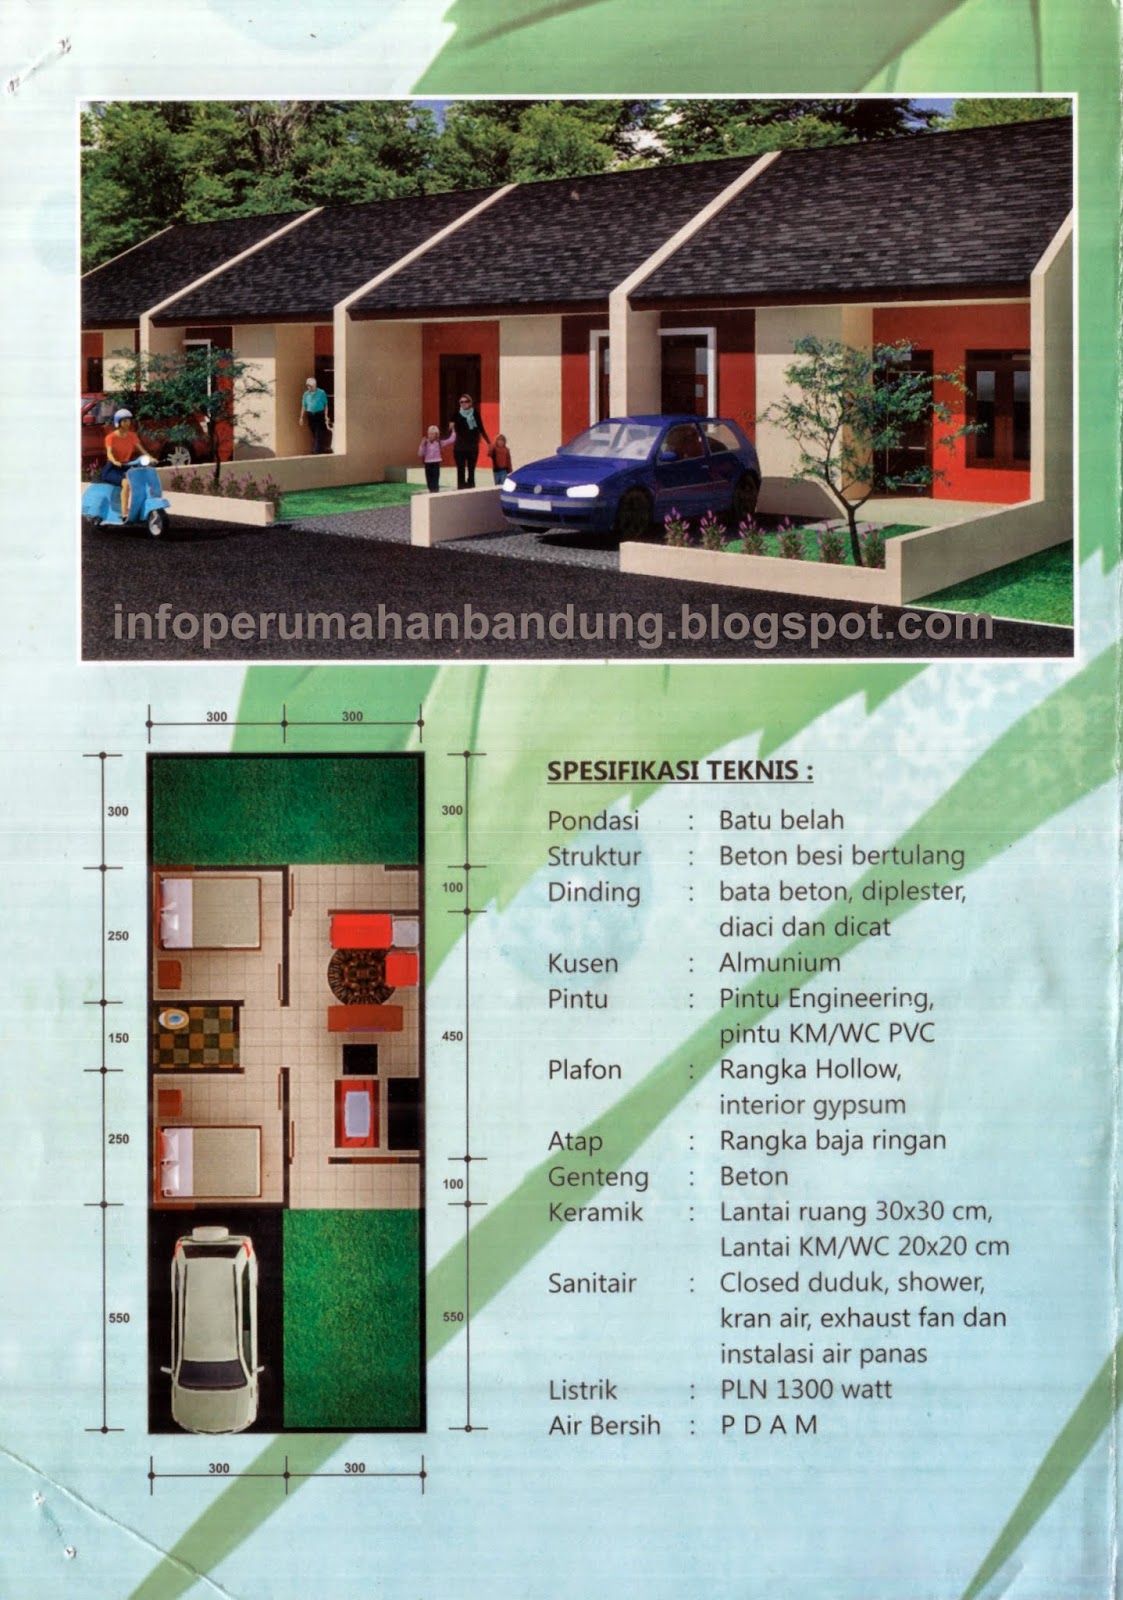 Perumahan di Bandung - Rumah Bandung - Rumah Baru Bandung 